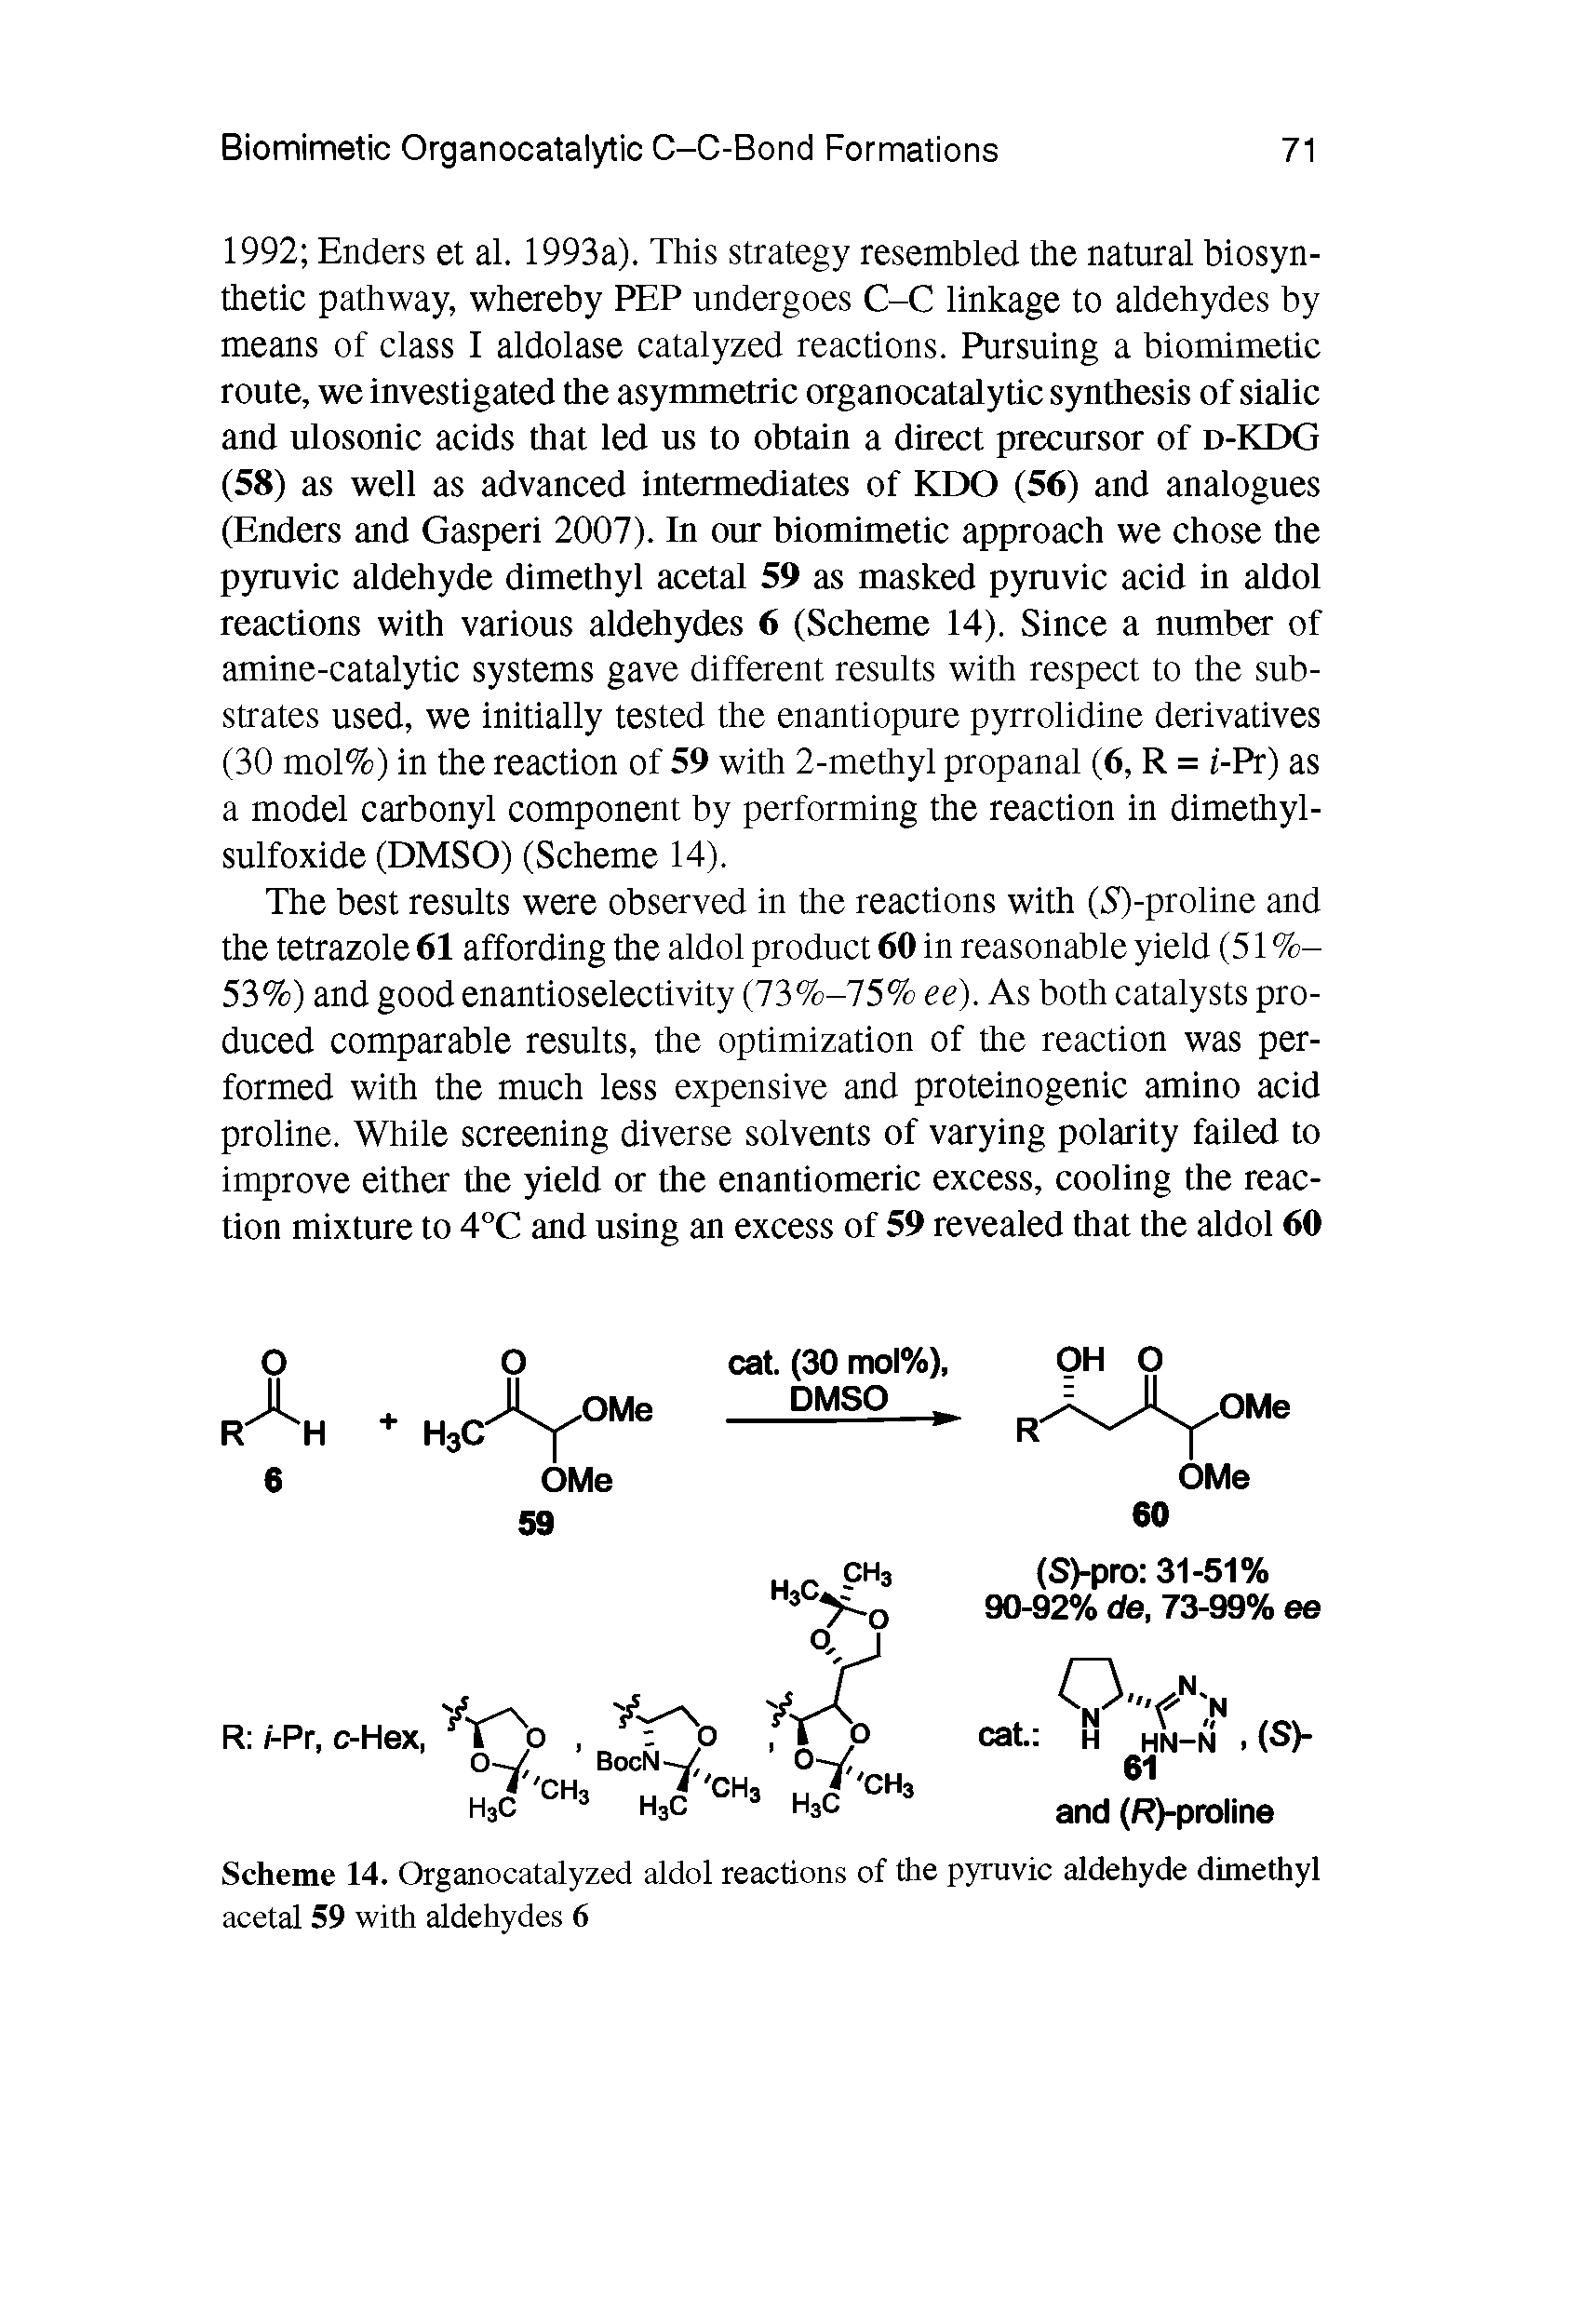 Scheme 14. Organocatalyzed aldol reactions of the pyruvic aldehyde dimethyl acetal 59 with aldehydes 6...